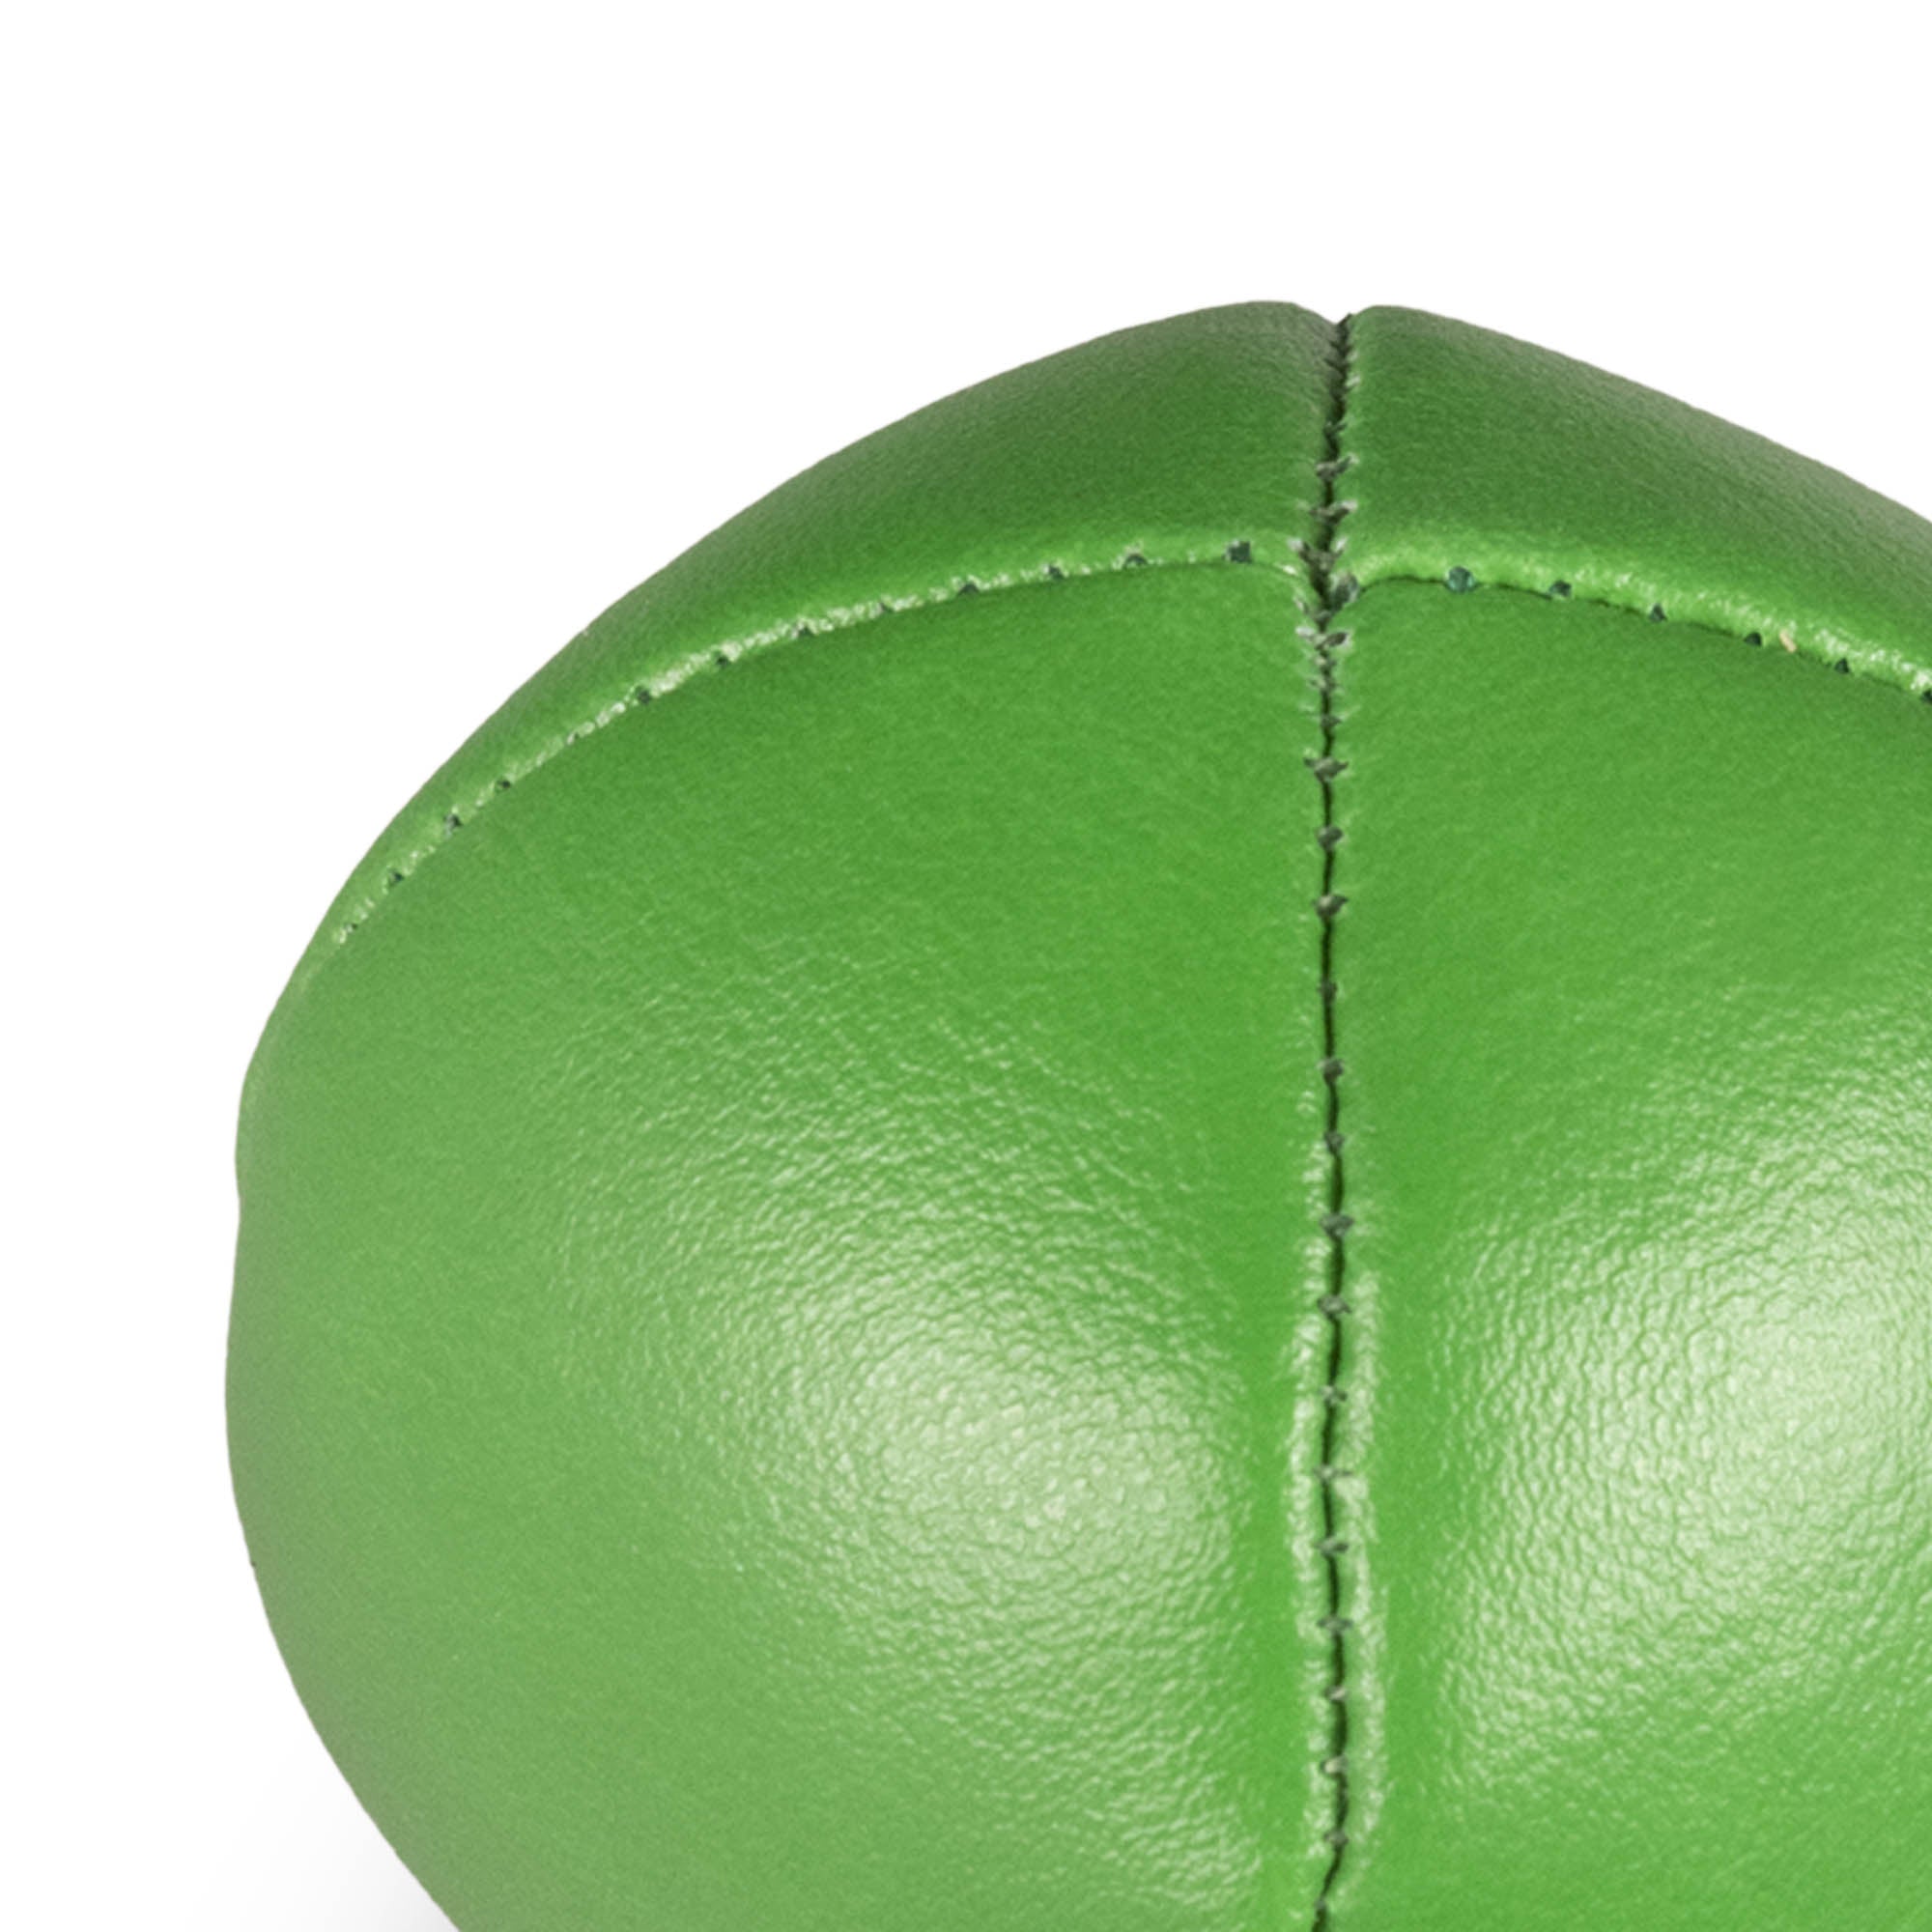 green ball close up